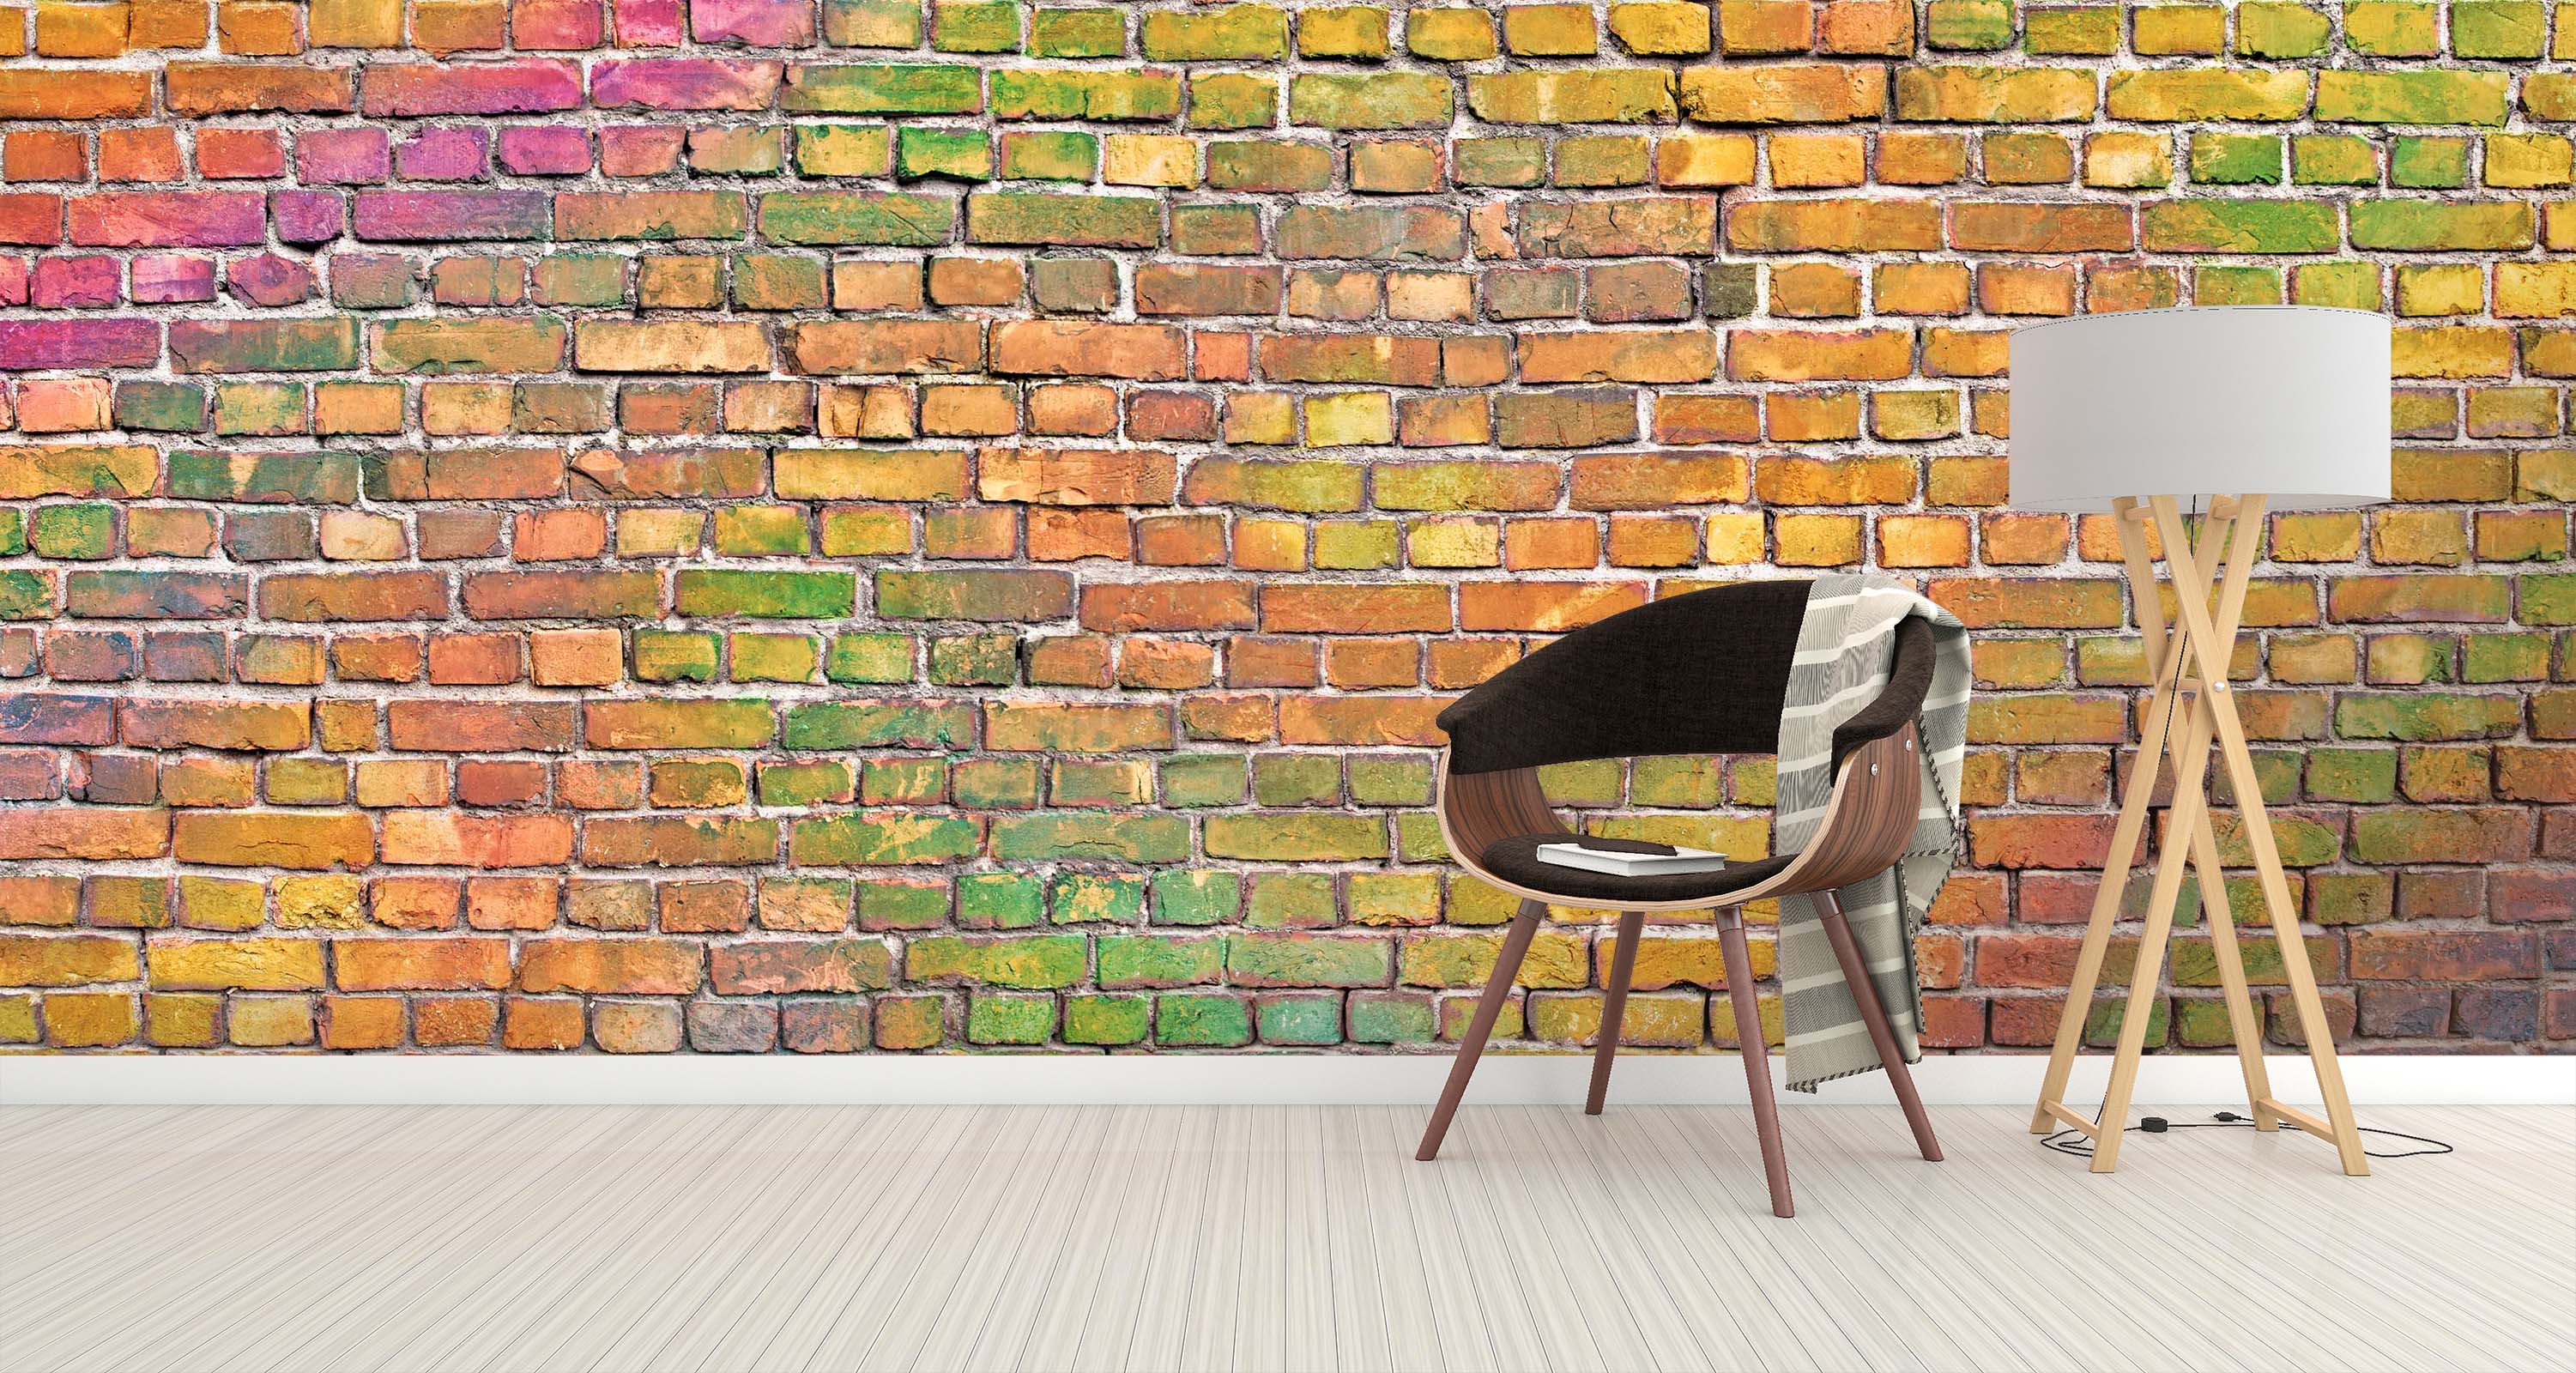 3D Colored Brick Wall 108 Wall Murals